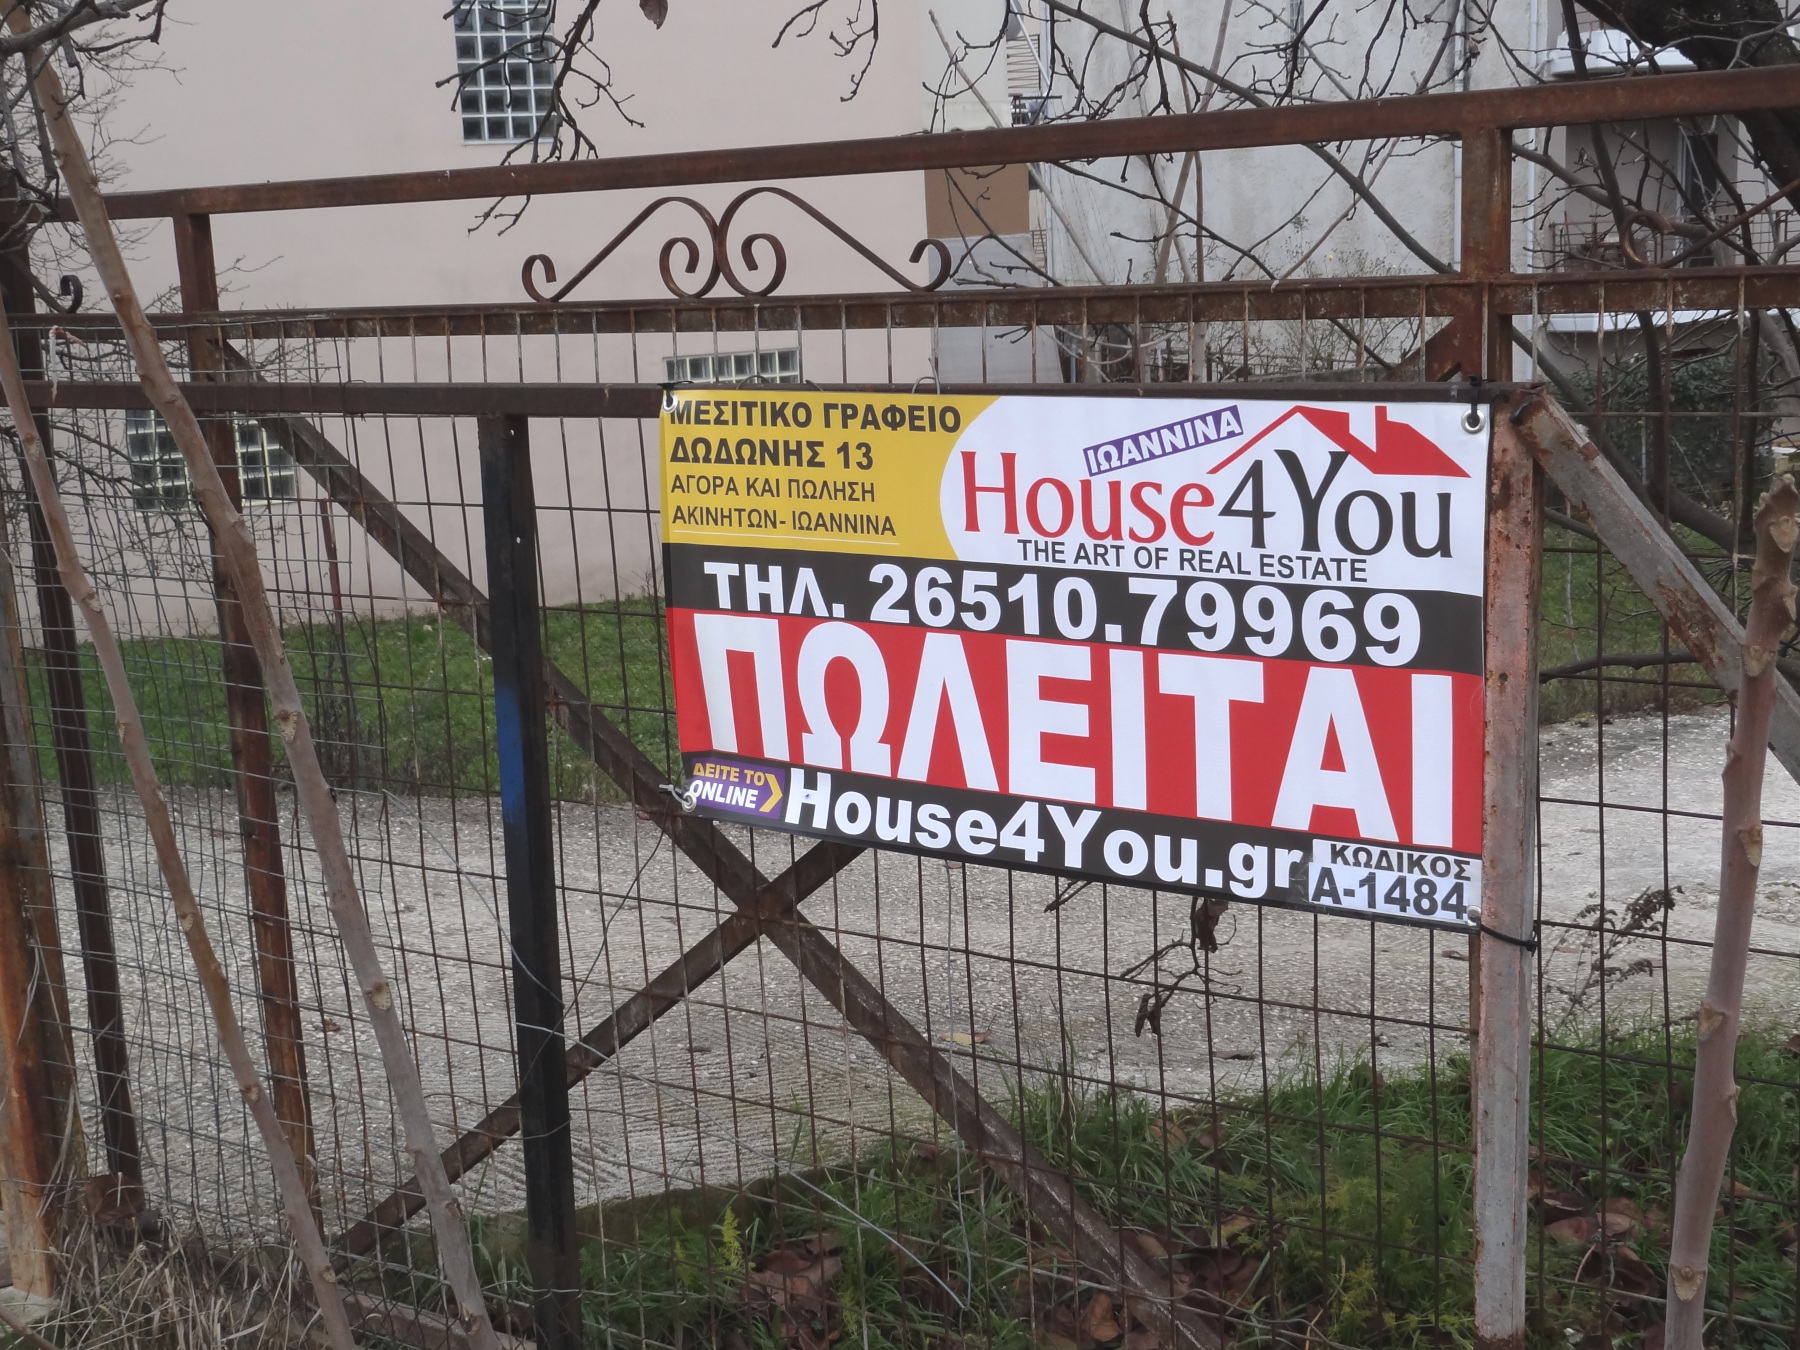 Plot of 397 sq.m. for sale with S.D. 0.5 in Kardamitsia Ioannina on Tsakalov 11 near Ethnikis Antistaseos Street